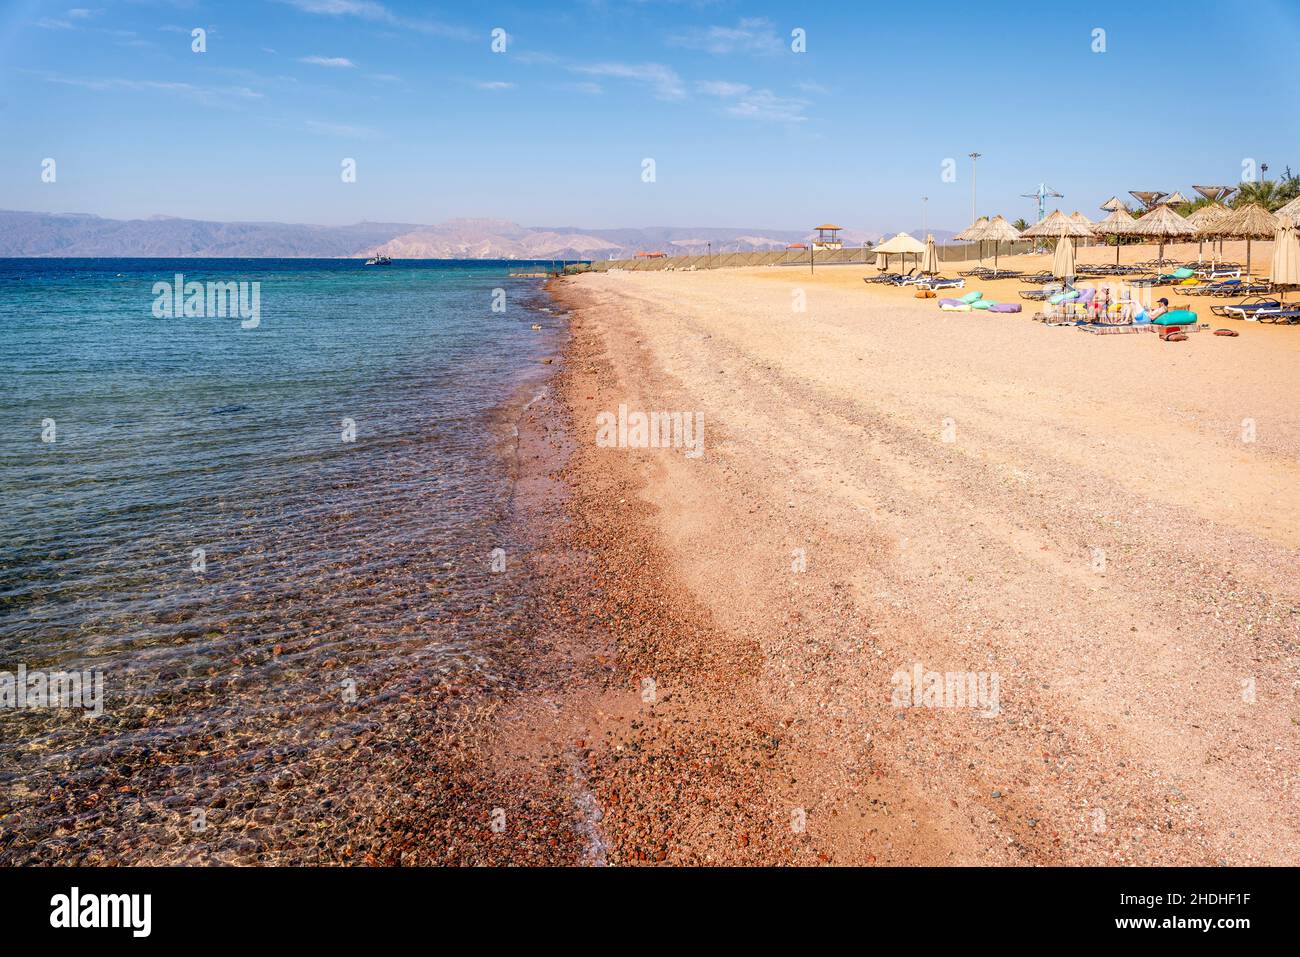 The Beach At The Berenice Beach Club, Aqaba, Aqaba Governorate, Jordan  Stock Photo - Alamy